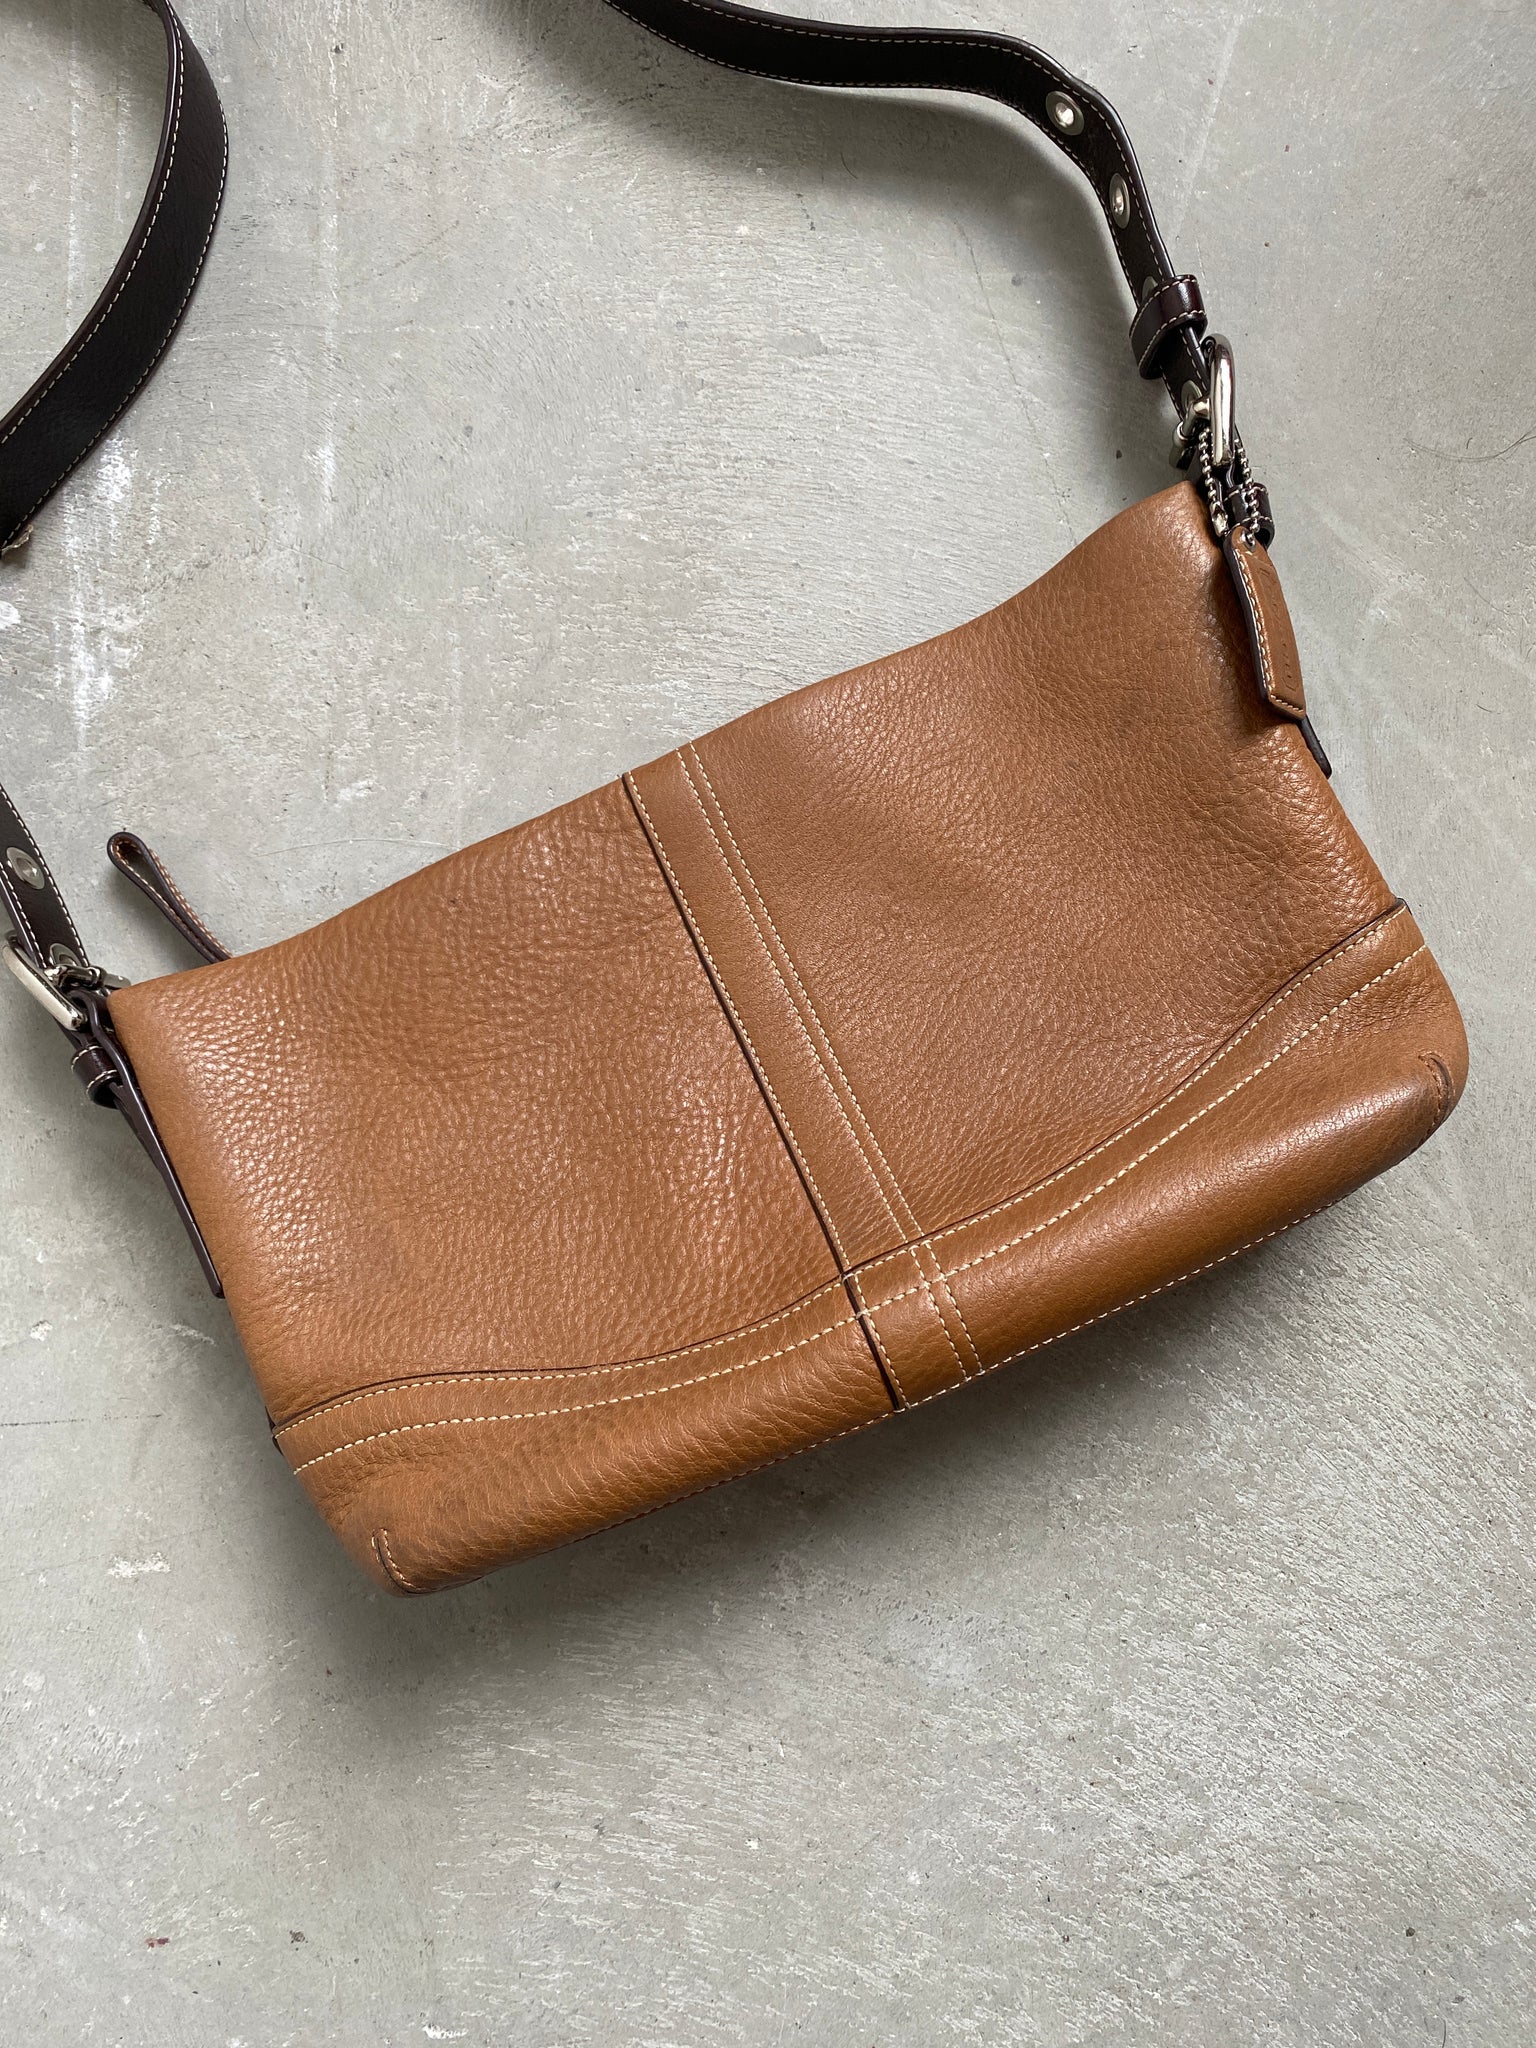 Women's Brown Coach Handbags, Bags & Purses | John Lewis & Partners